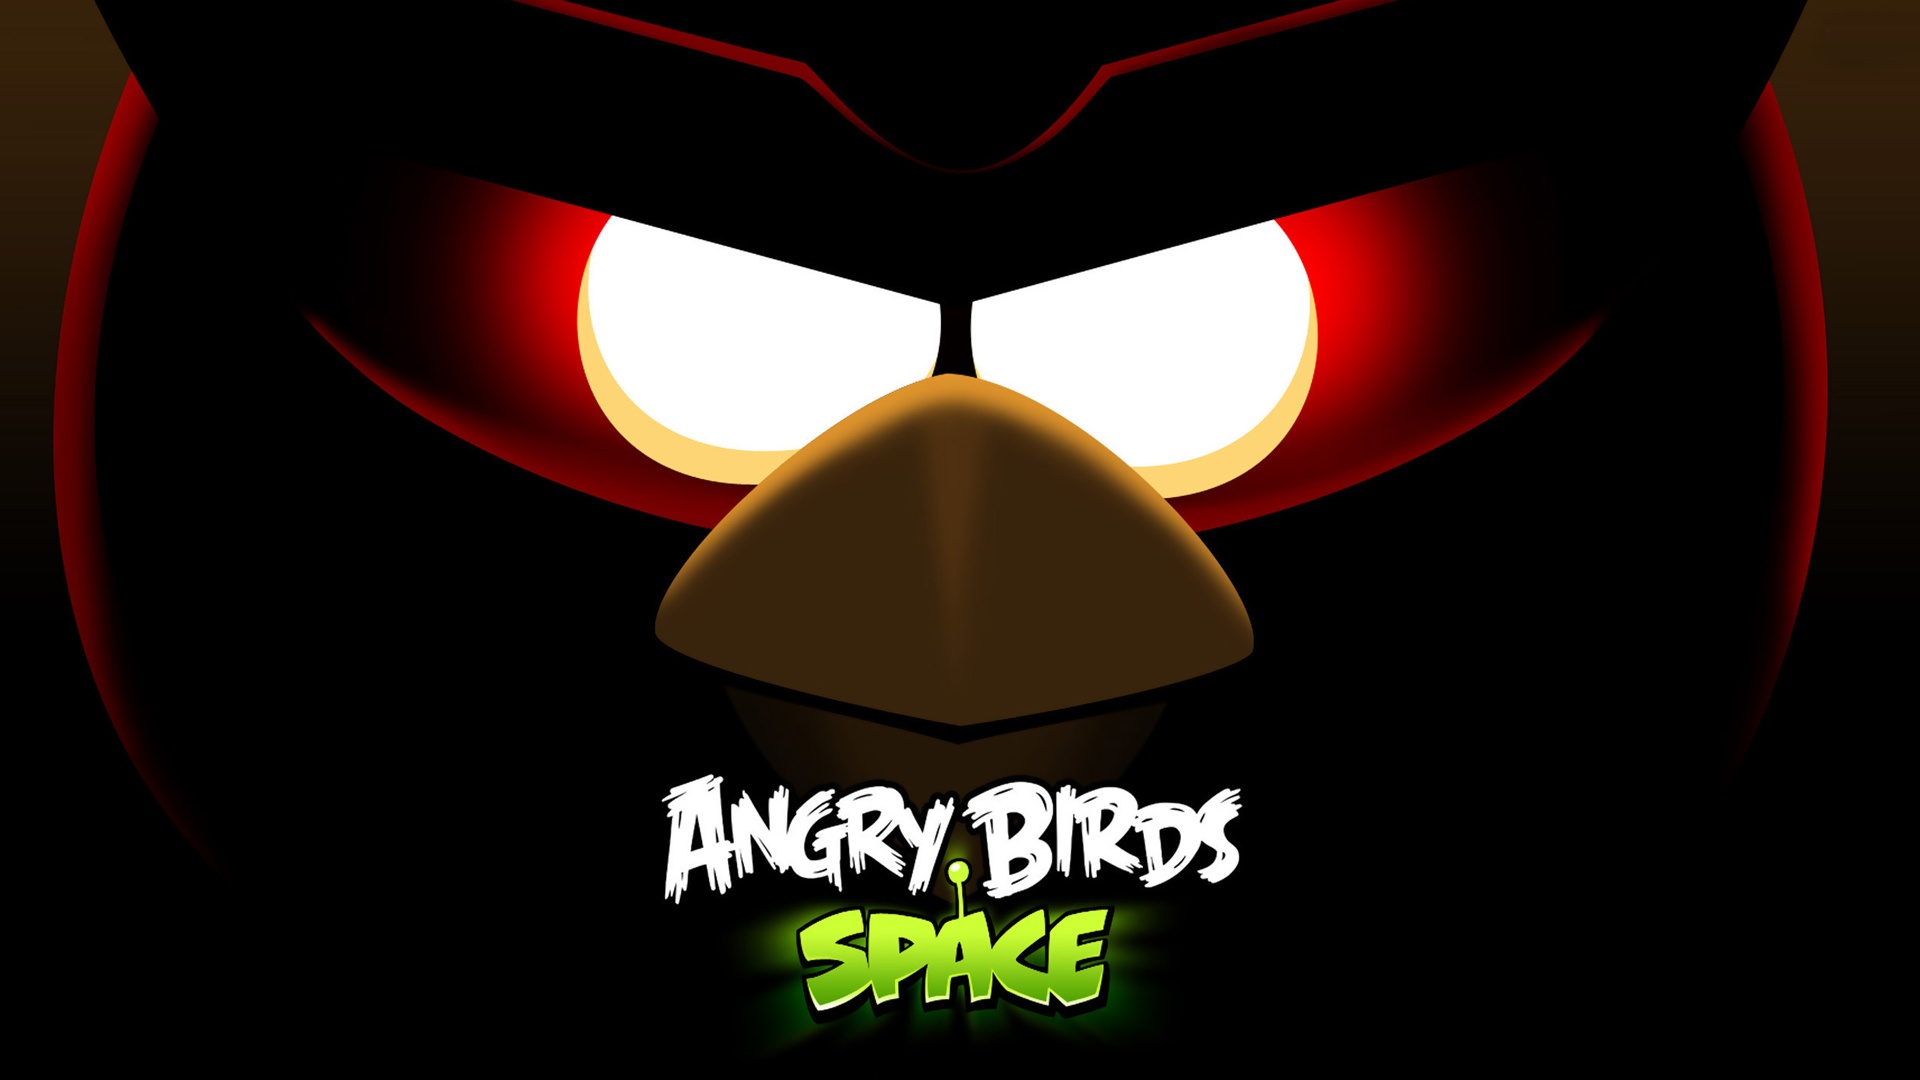 Descargar fondos de escritorio de Angry Birds Space HD